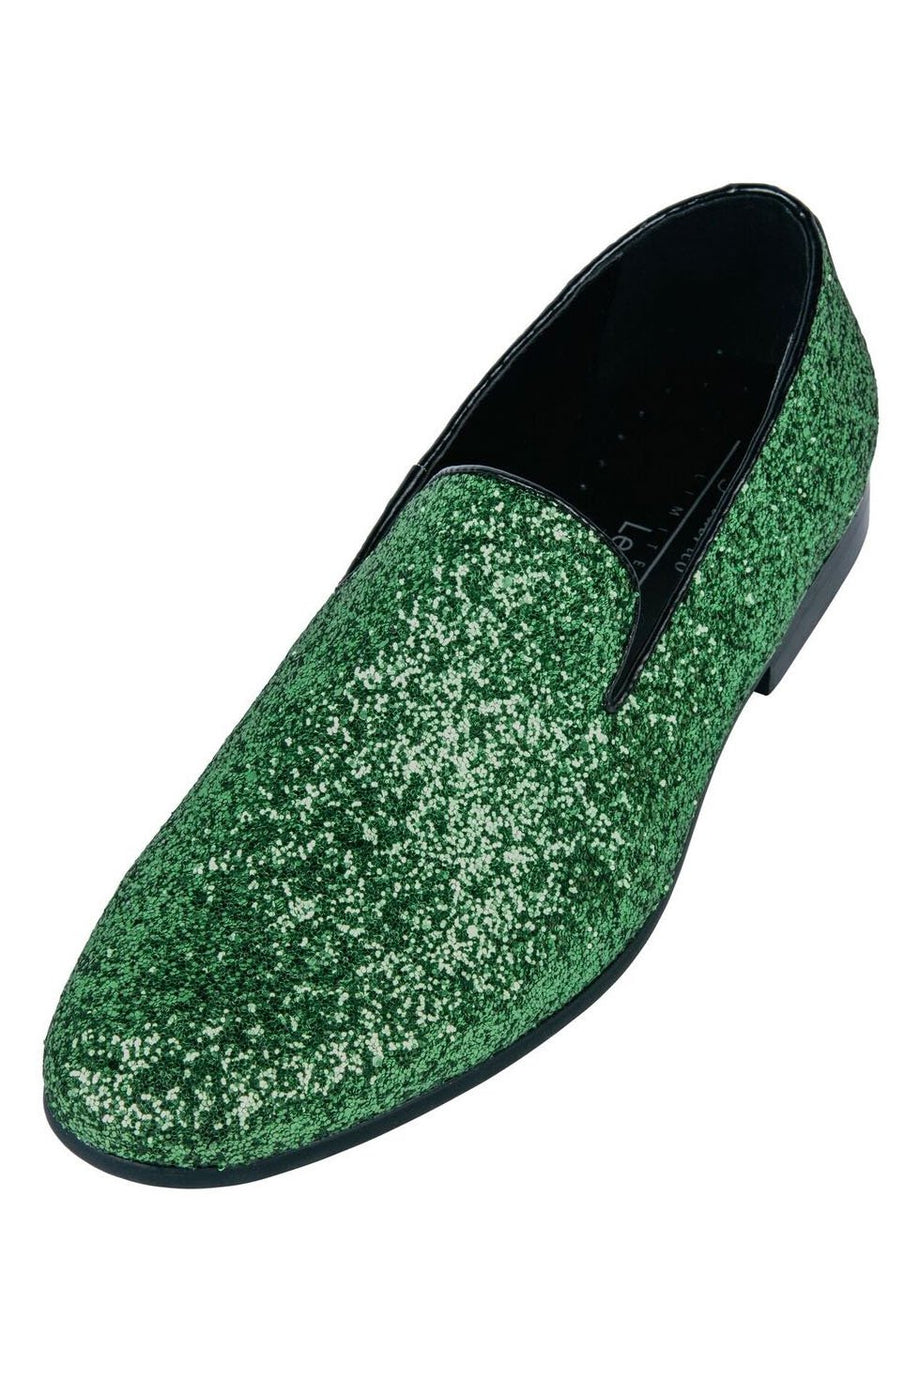 Frederico Leone "Sparkle" Green Shoes